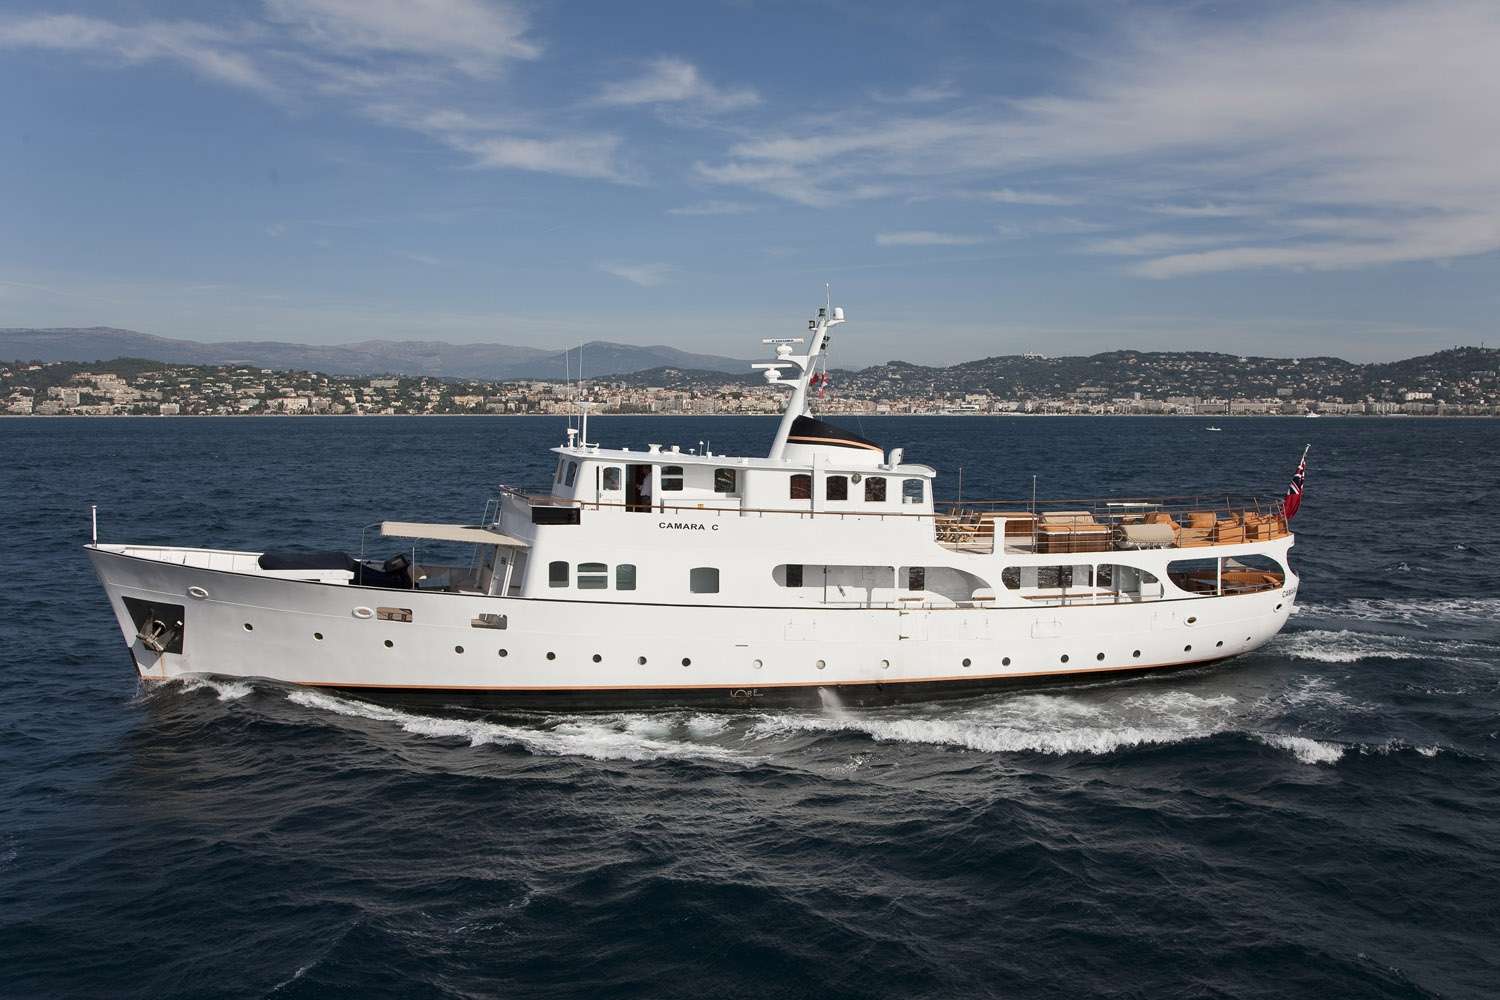 camara c - Luxury yacht charter Thailand & Boat hire in Indian Ocean & SE Asia 1